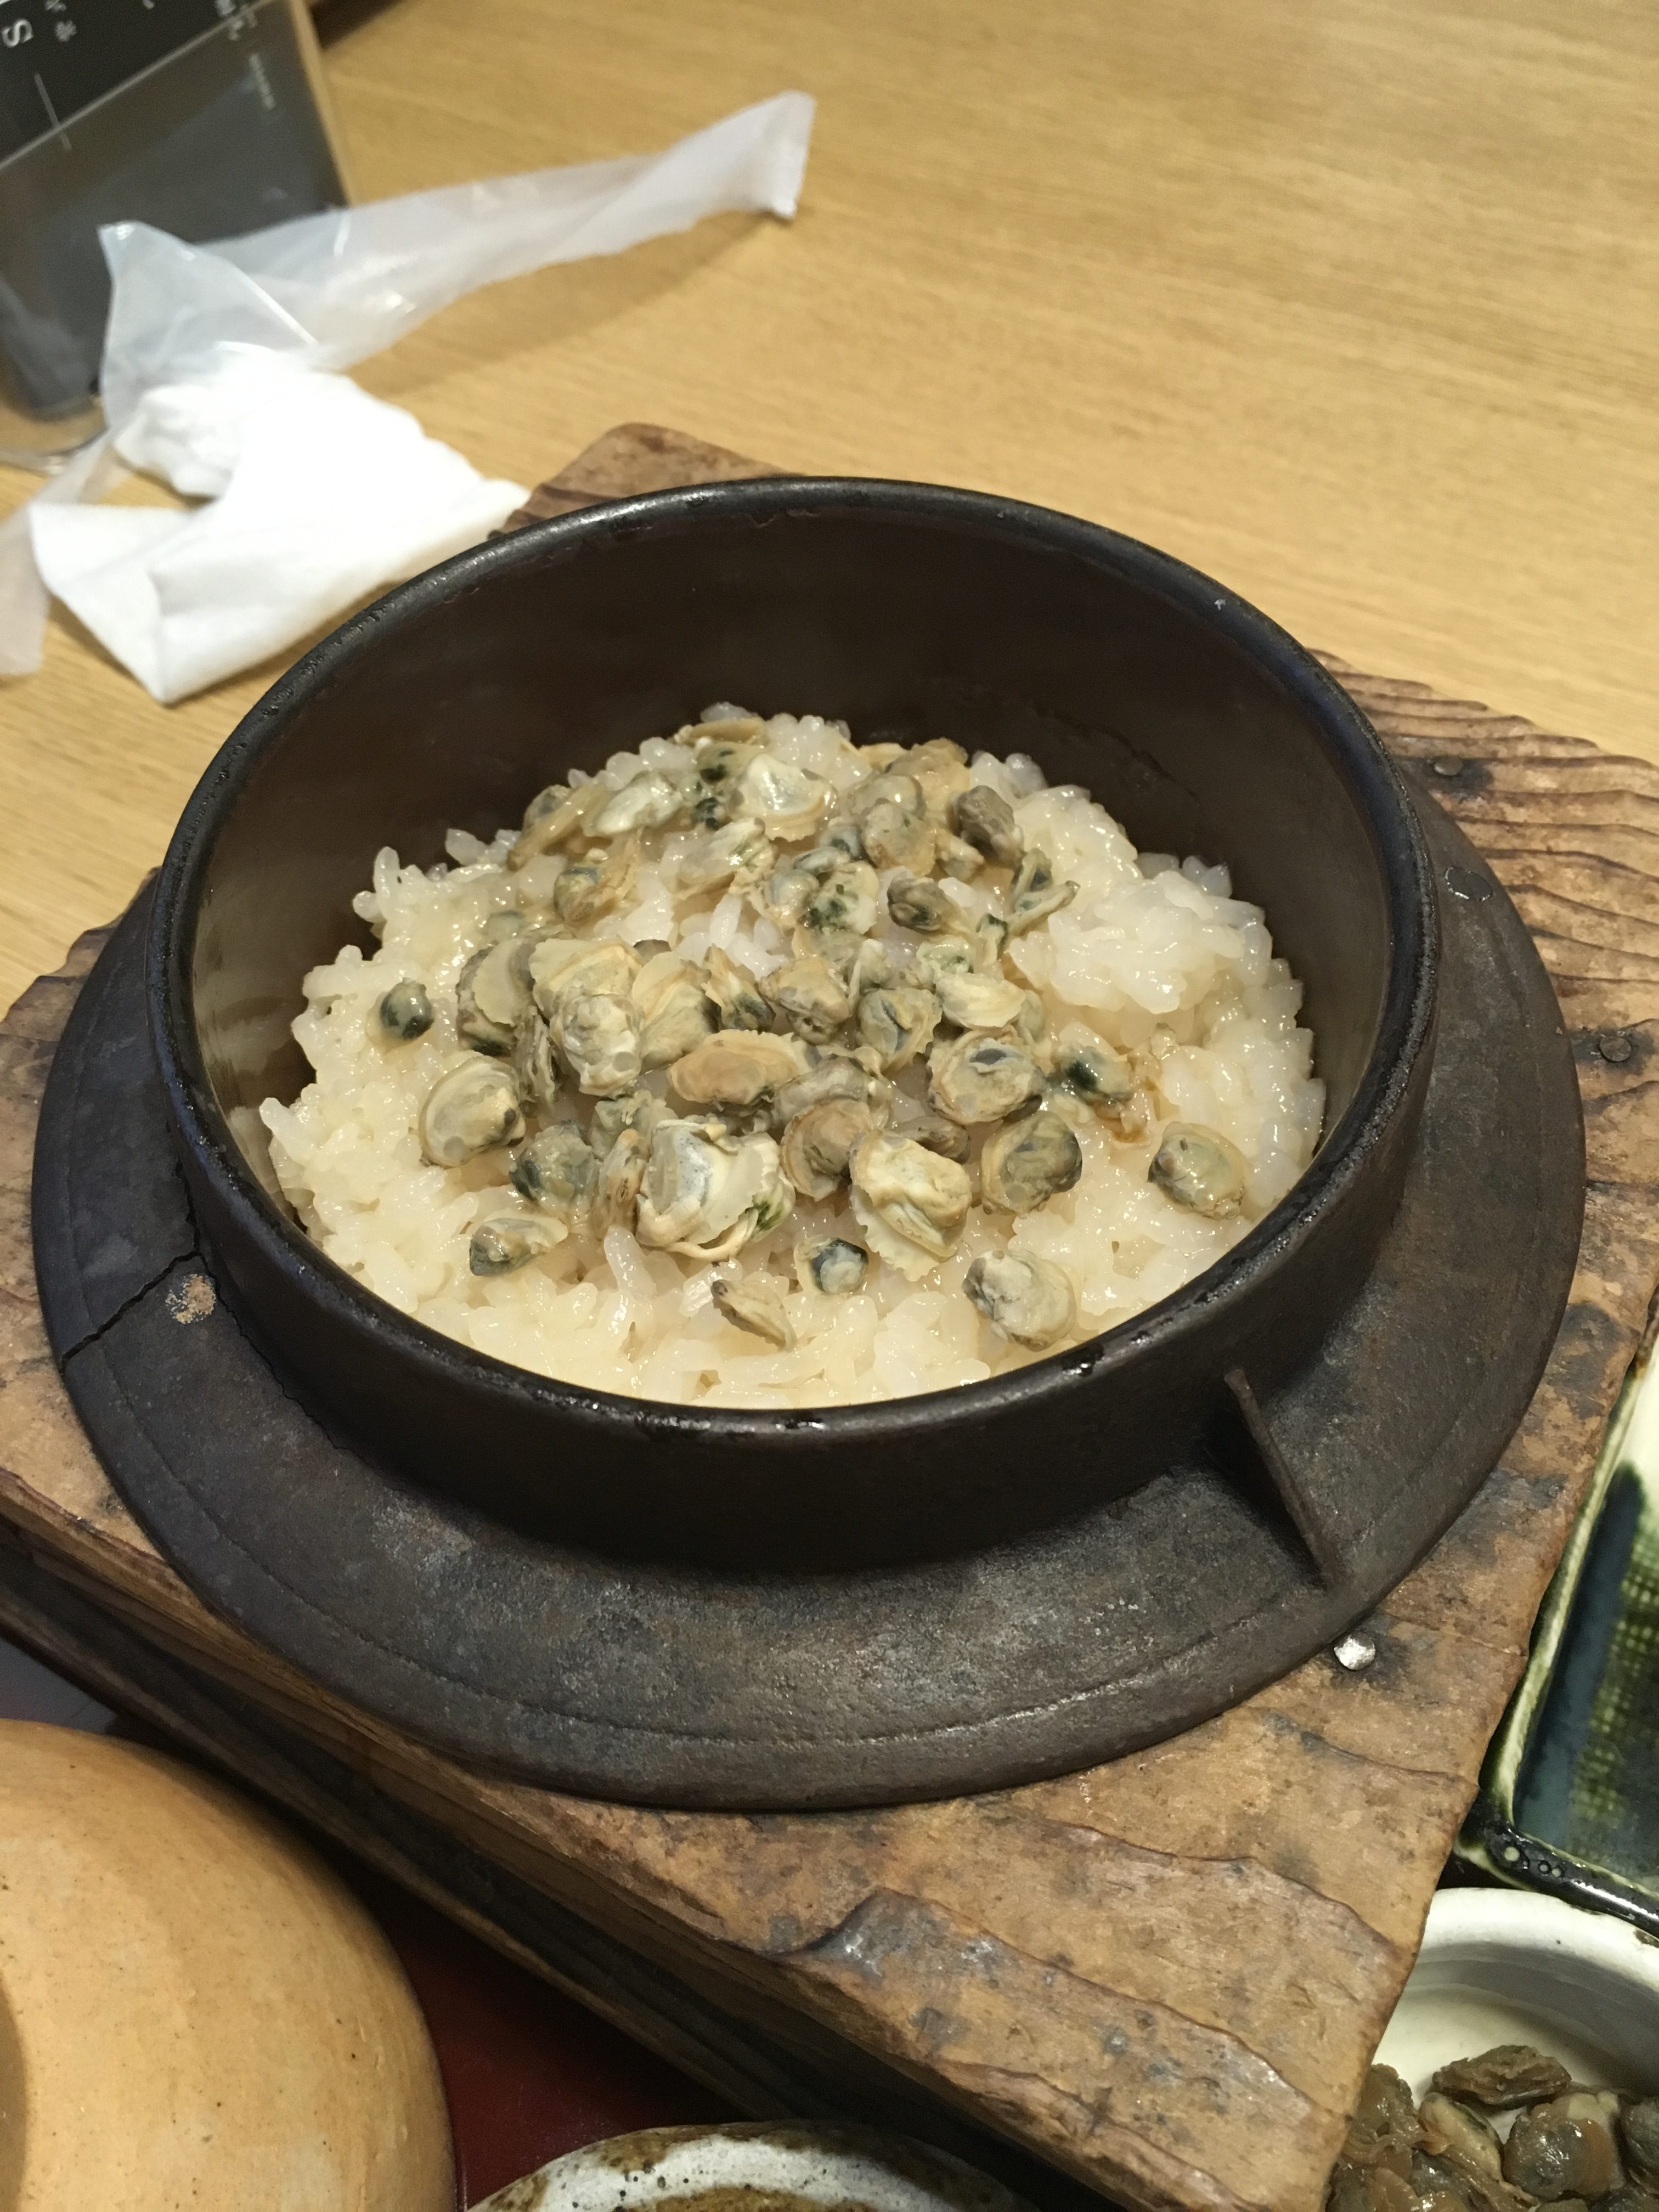 clam and rice dish from Koshu in Shiga Japan